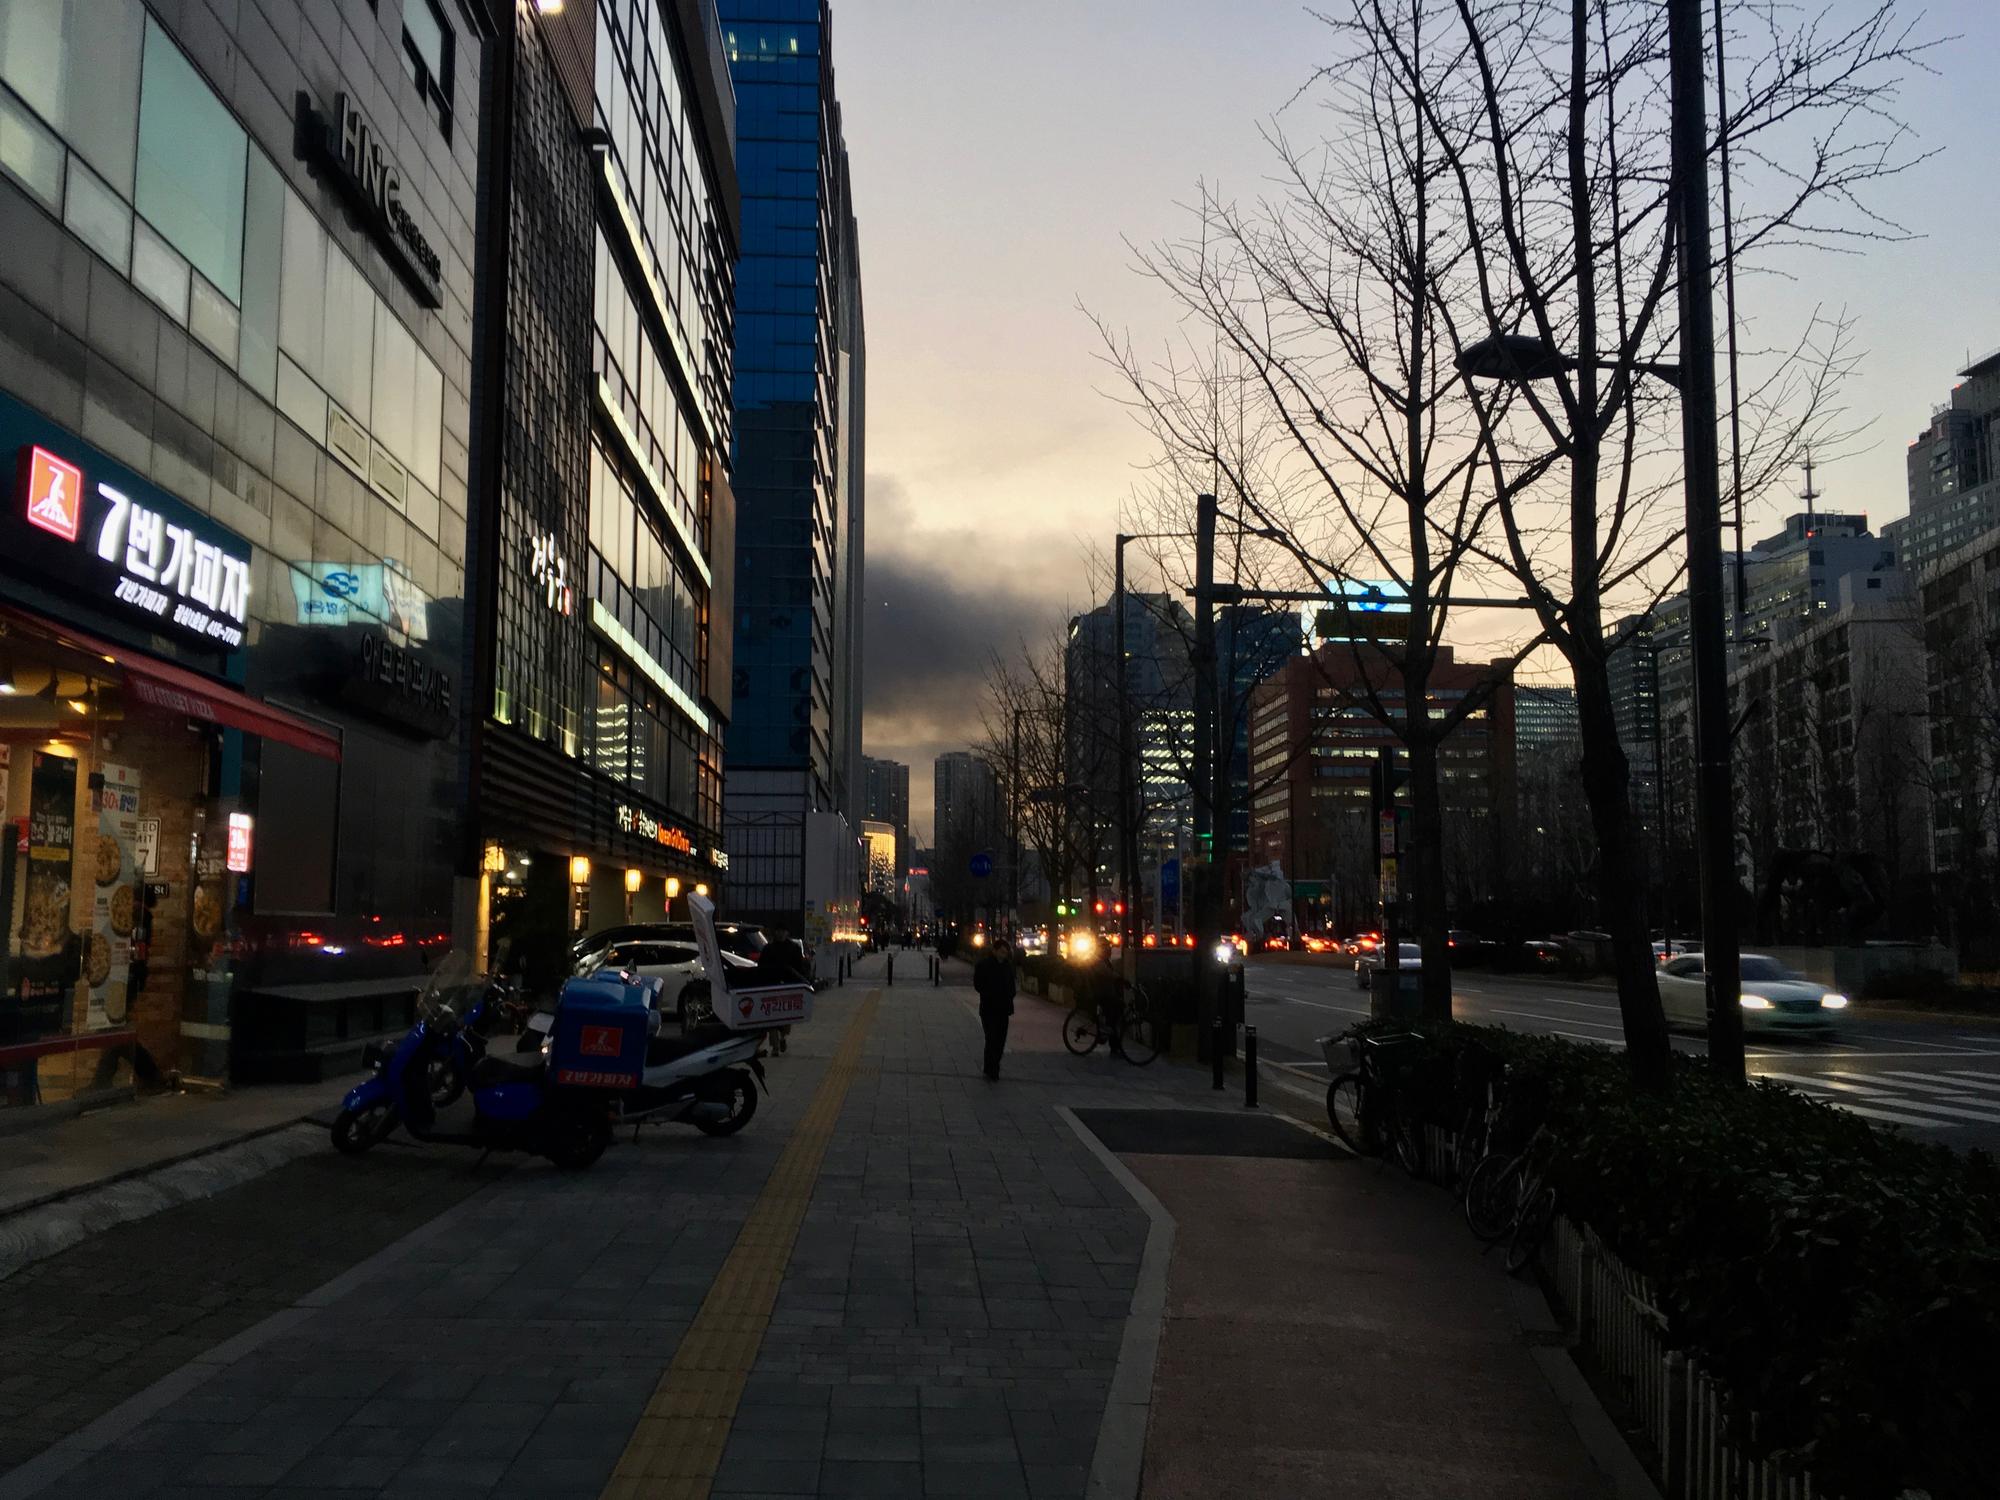 🇰🇷 Сеул, Южная Корея, декабрь 2018.